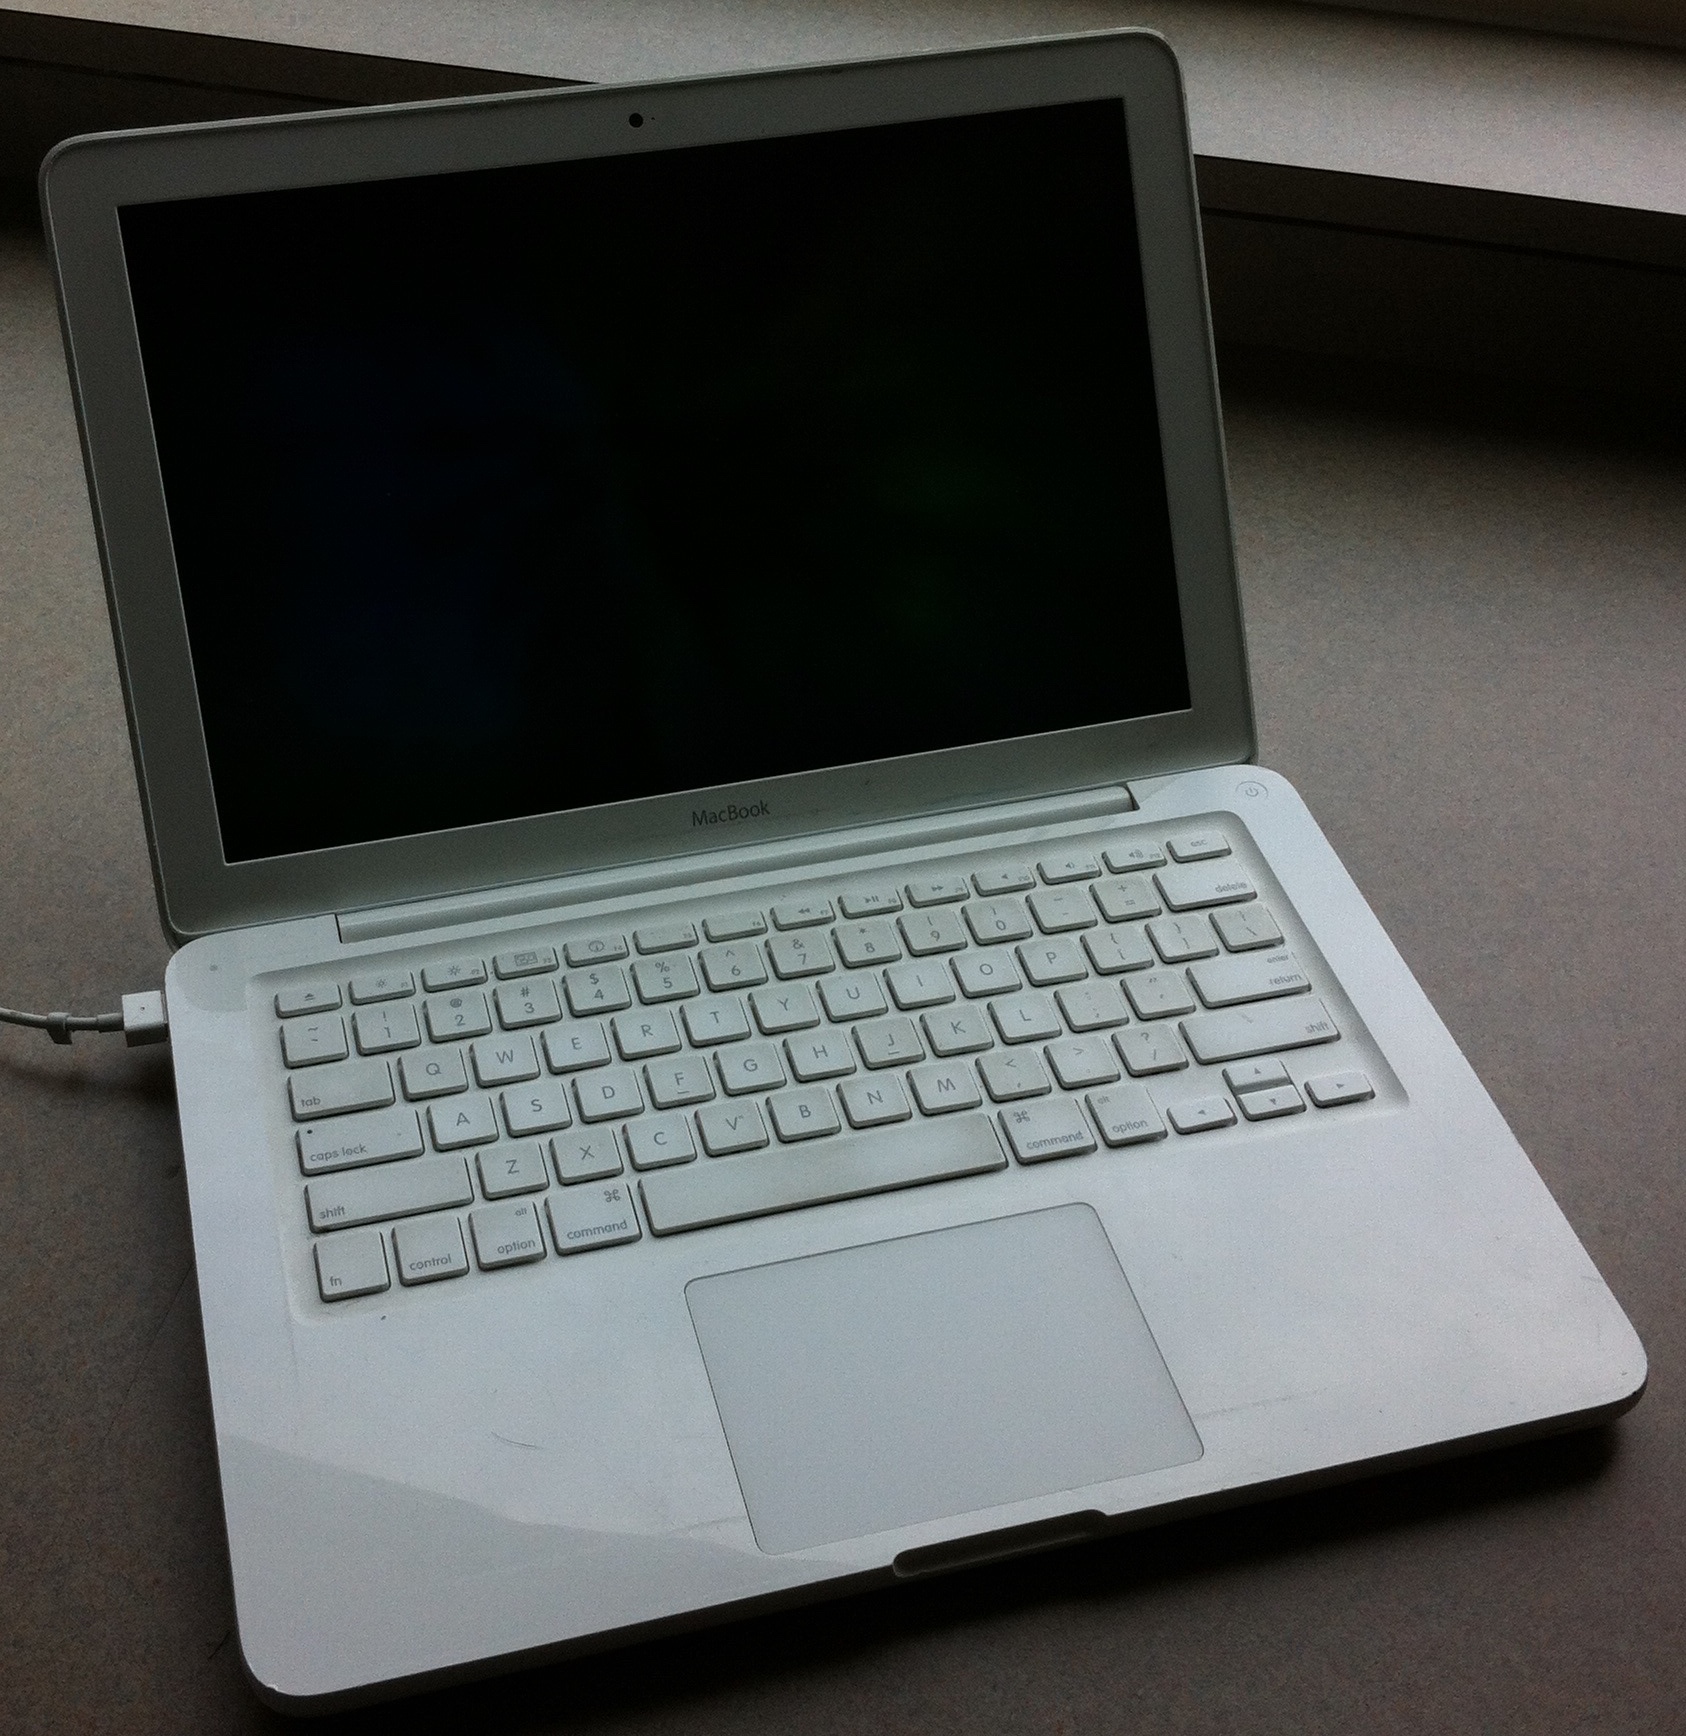 Install set for-13" Intel White or Black MacBook model ID 4,1 Leopard 10.5.